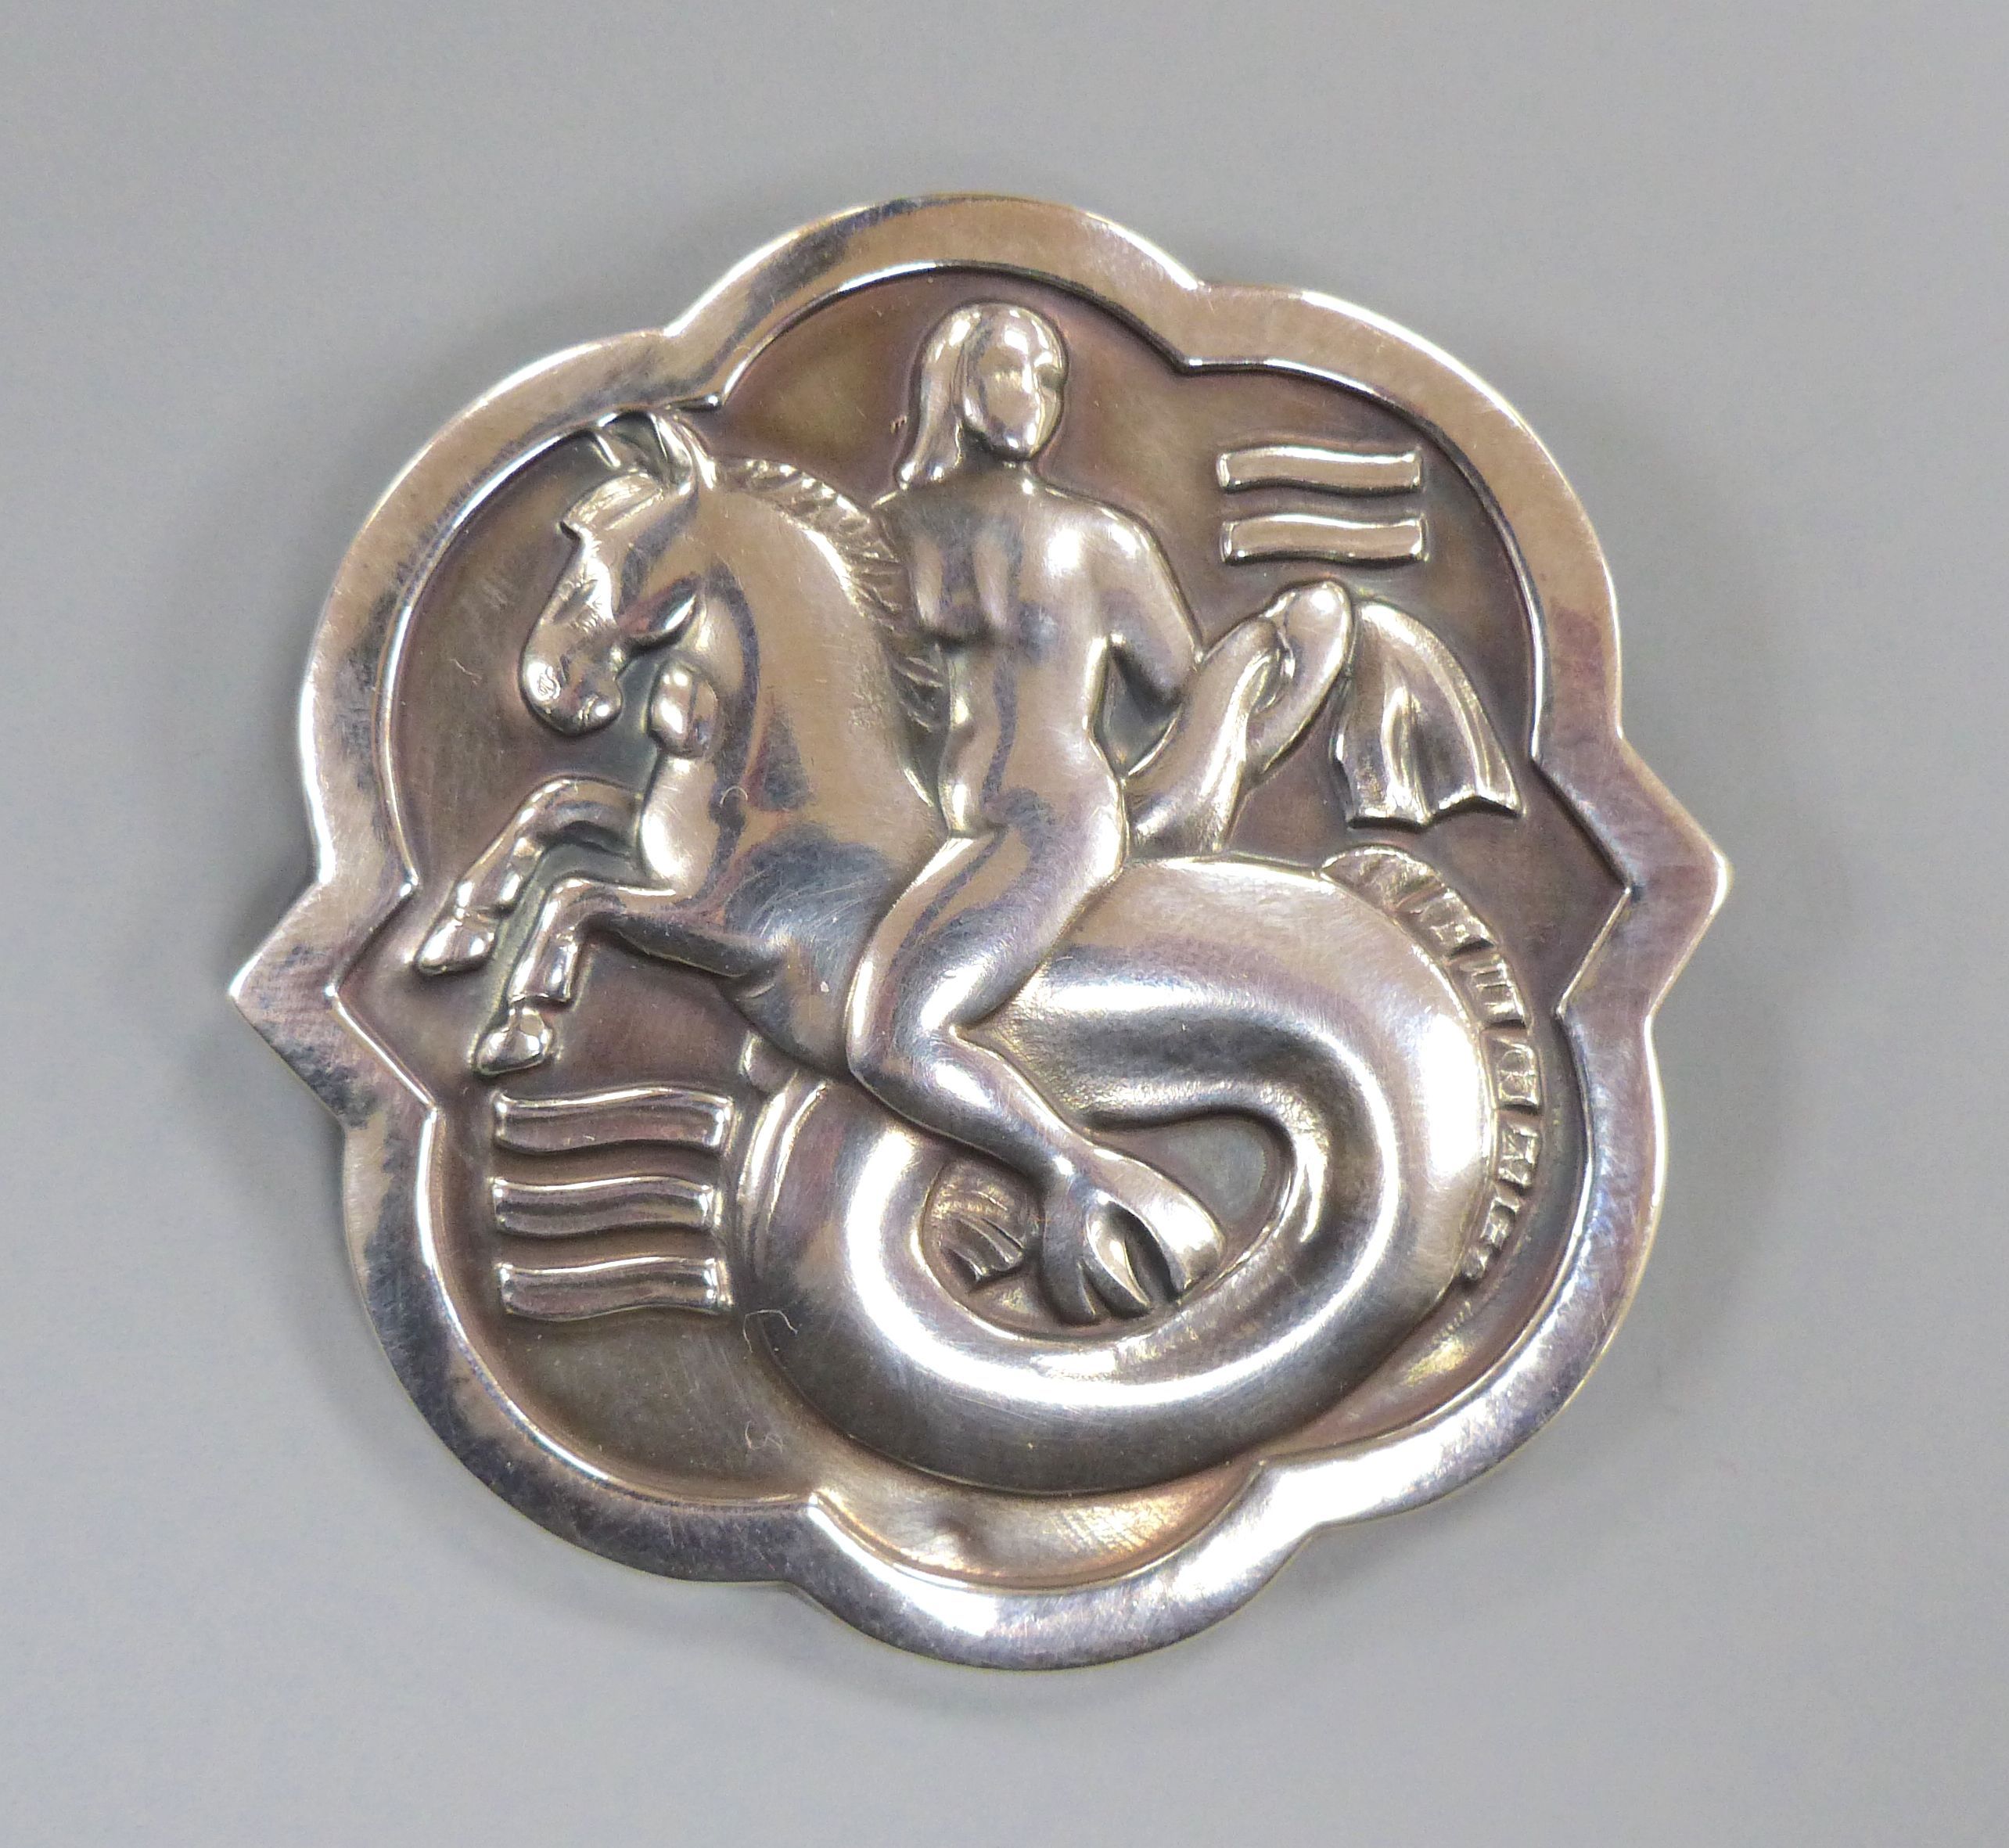 A George Jensen sterling shaped circular brooch, design no. 277 (Arno Malinowski?) depicting a mermaid on sea horse, 57mm.